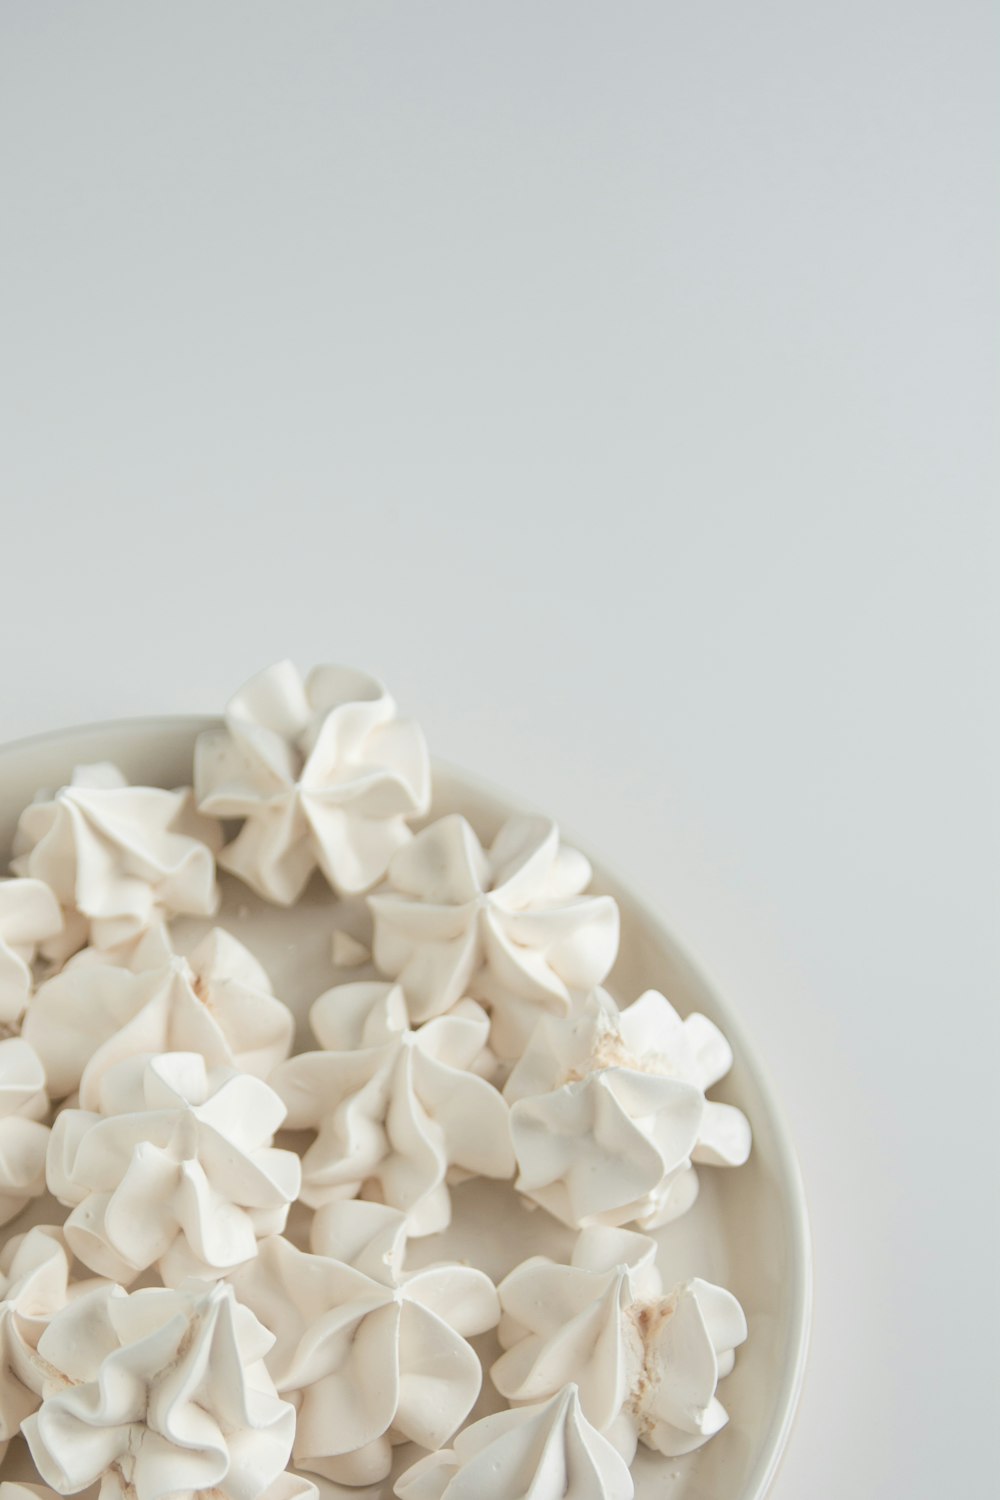 white popcorn on white ceramic bowl